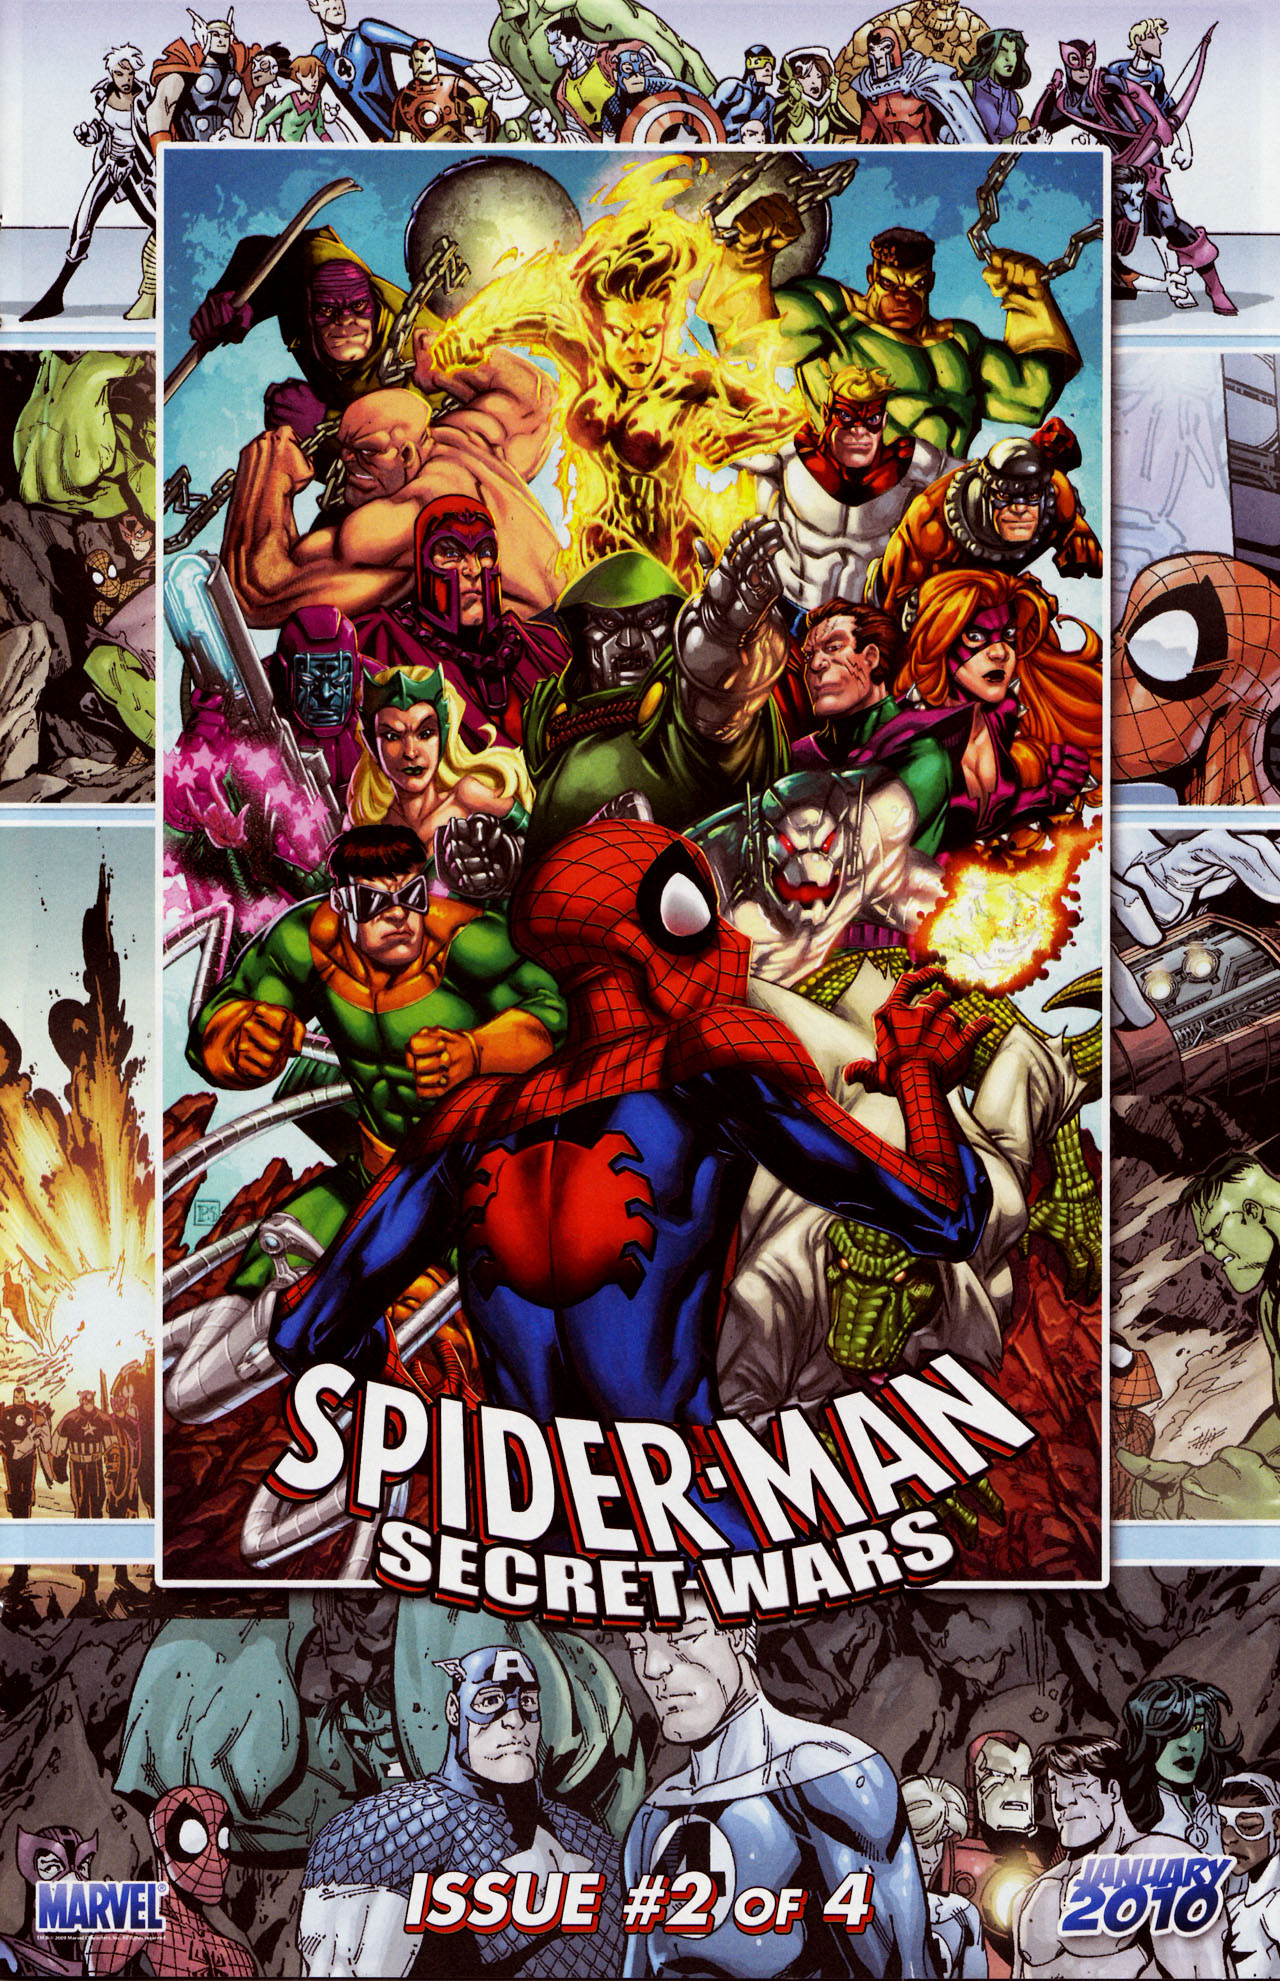 Marvel Super Hero Squad Issue 4 Viewcomic Reading Comics